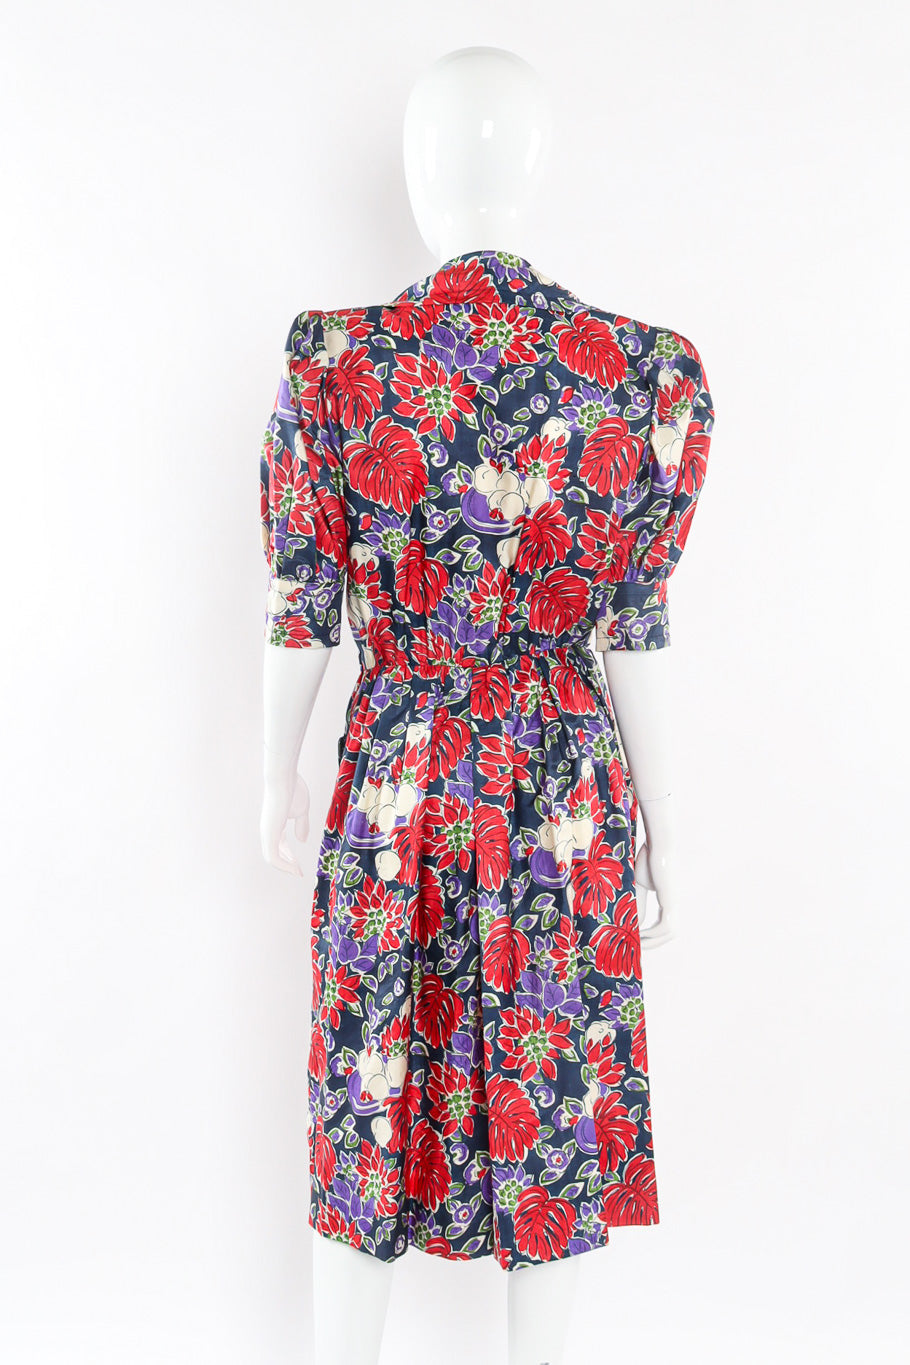 Multi-printed midi length dress by Yves Saint Laurent Back View @recessla